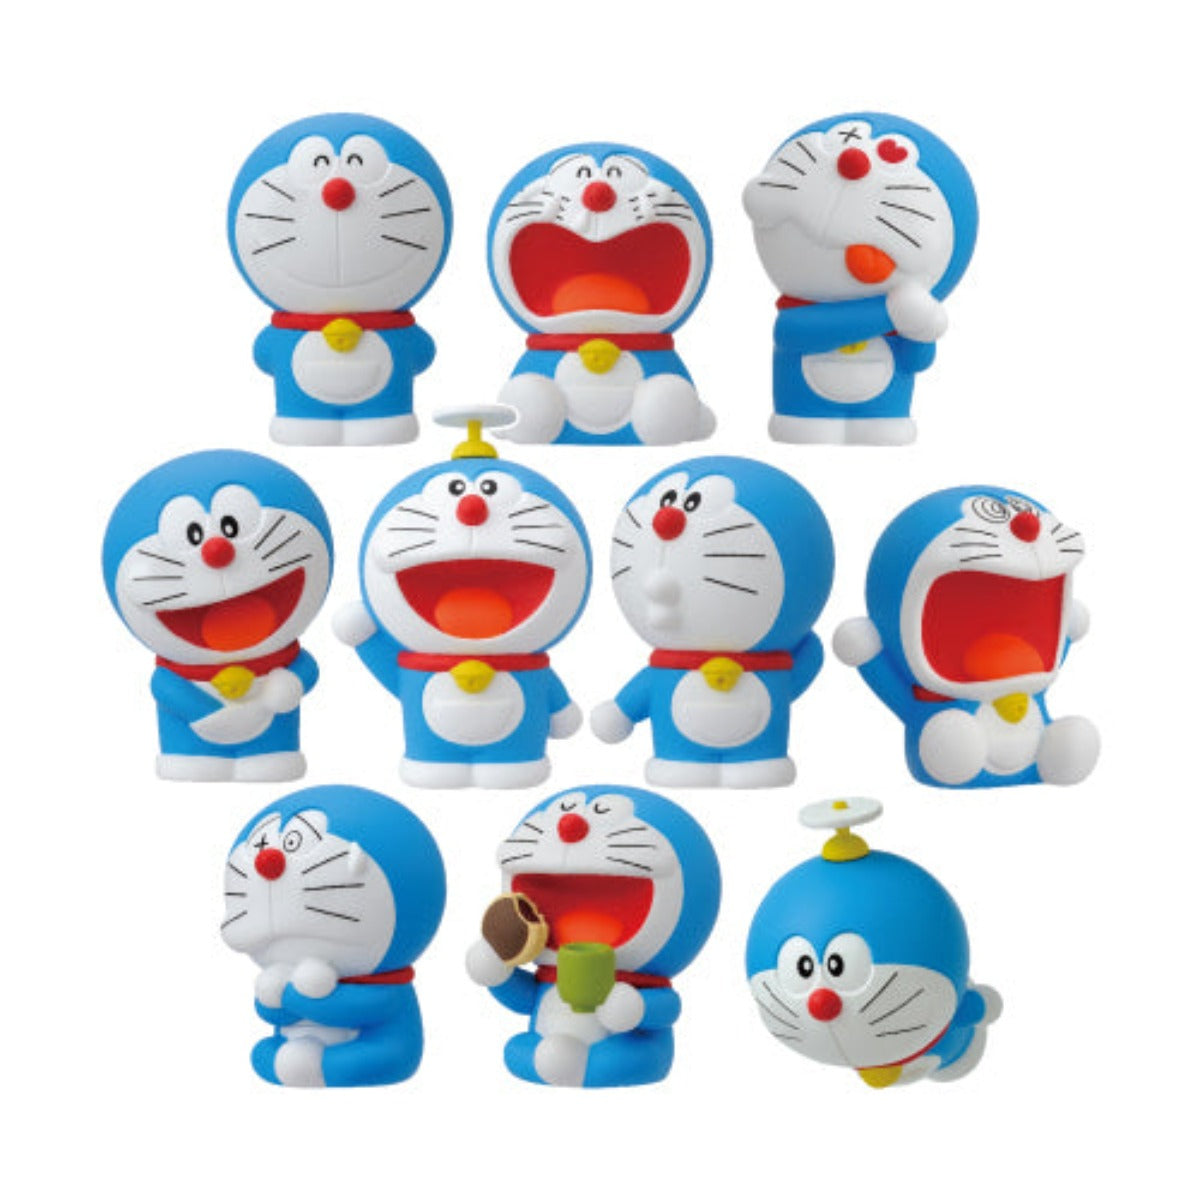 Mystery Box - Doraemon 50th Anniversary (10 styles) (Japan Edition) (1 piece)